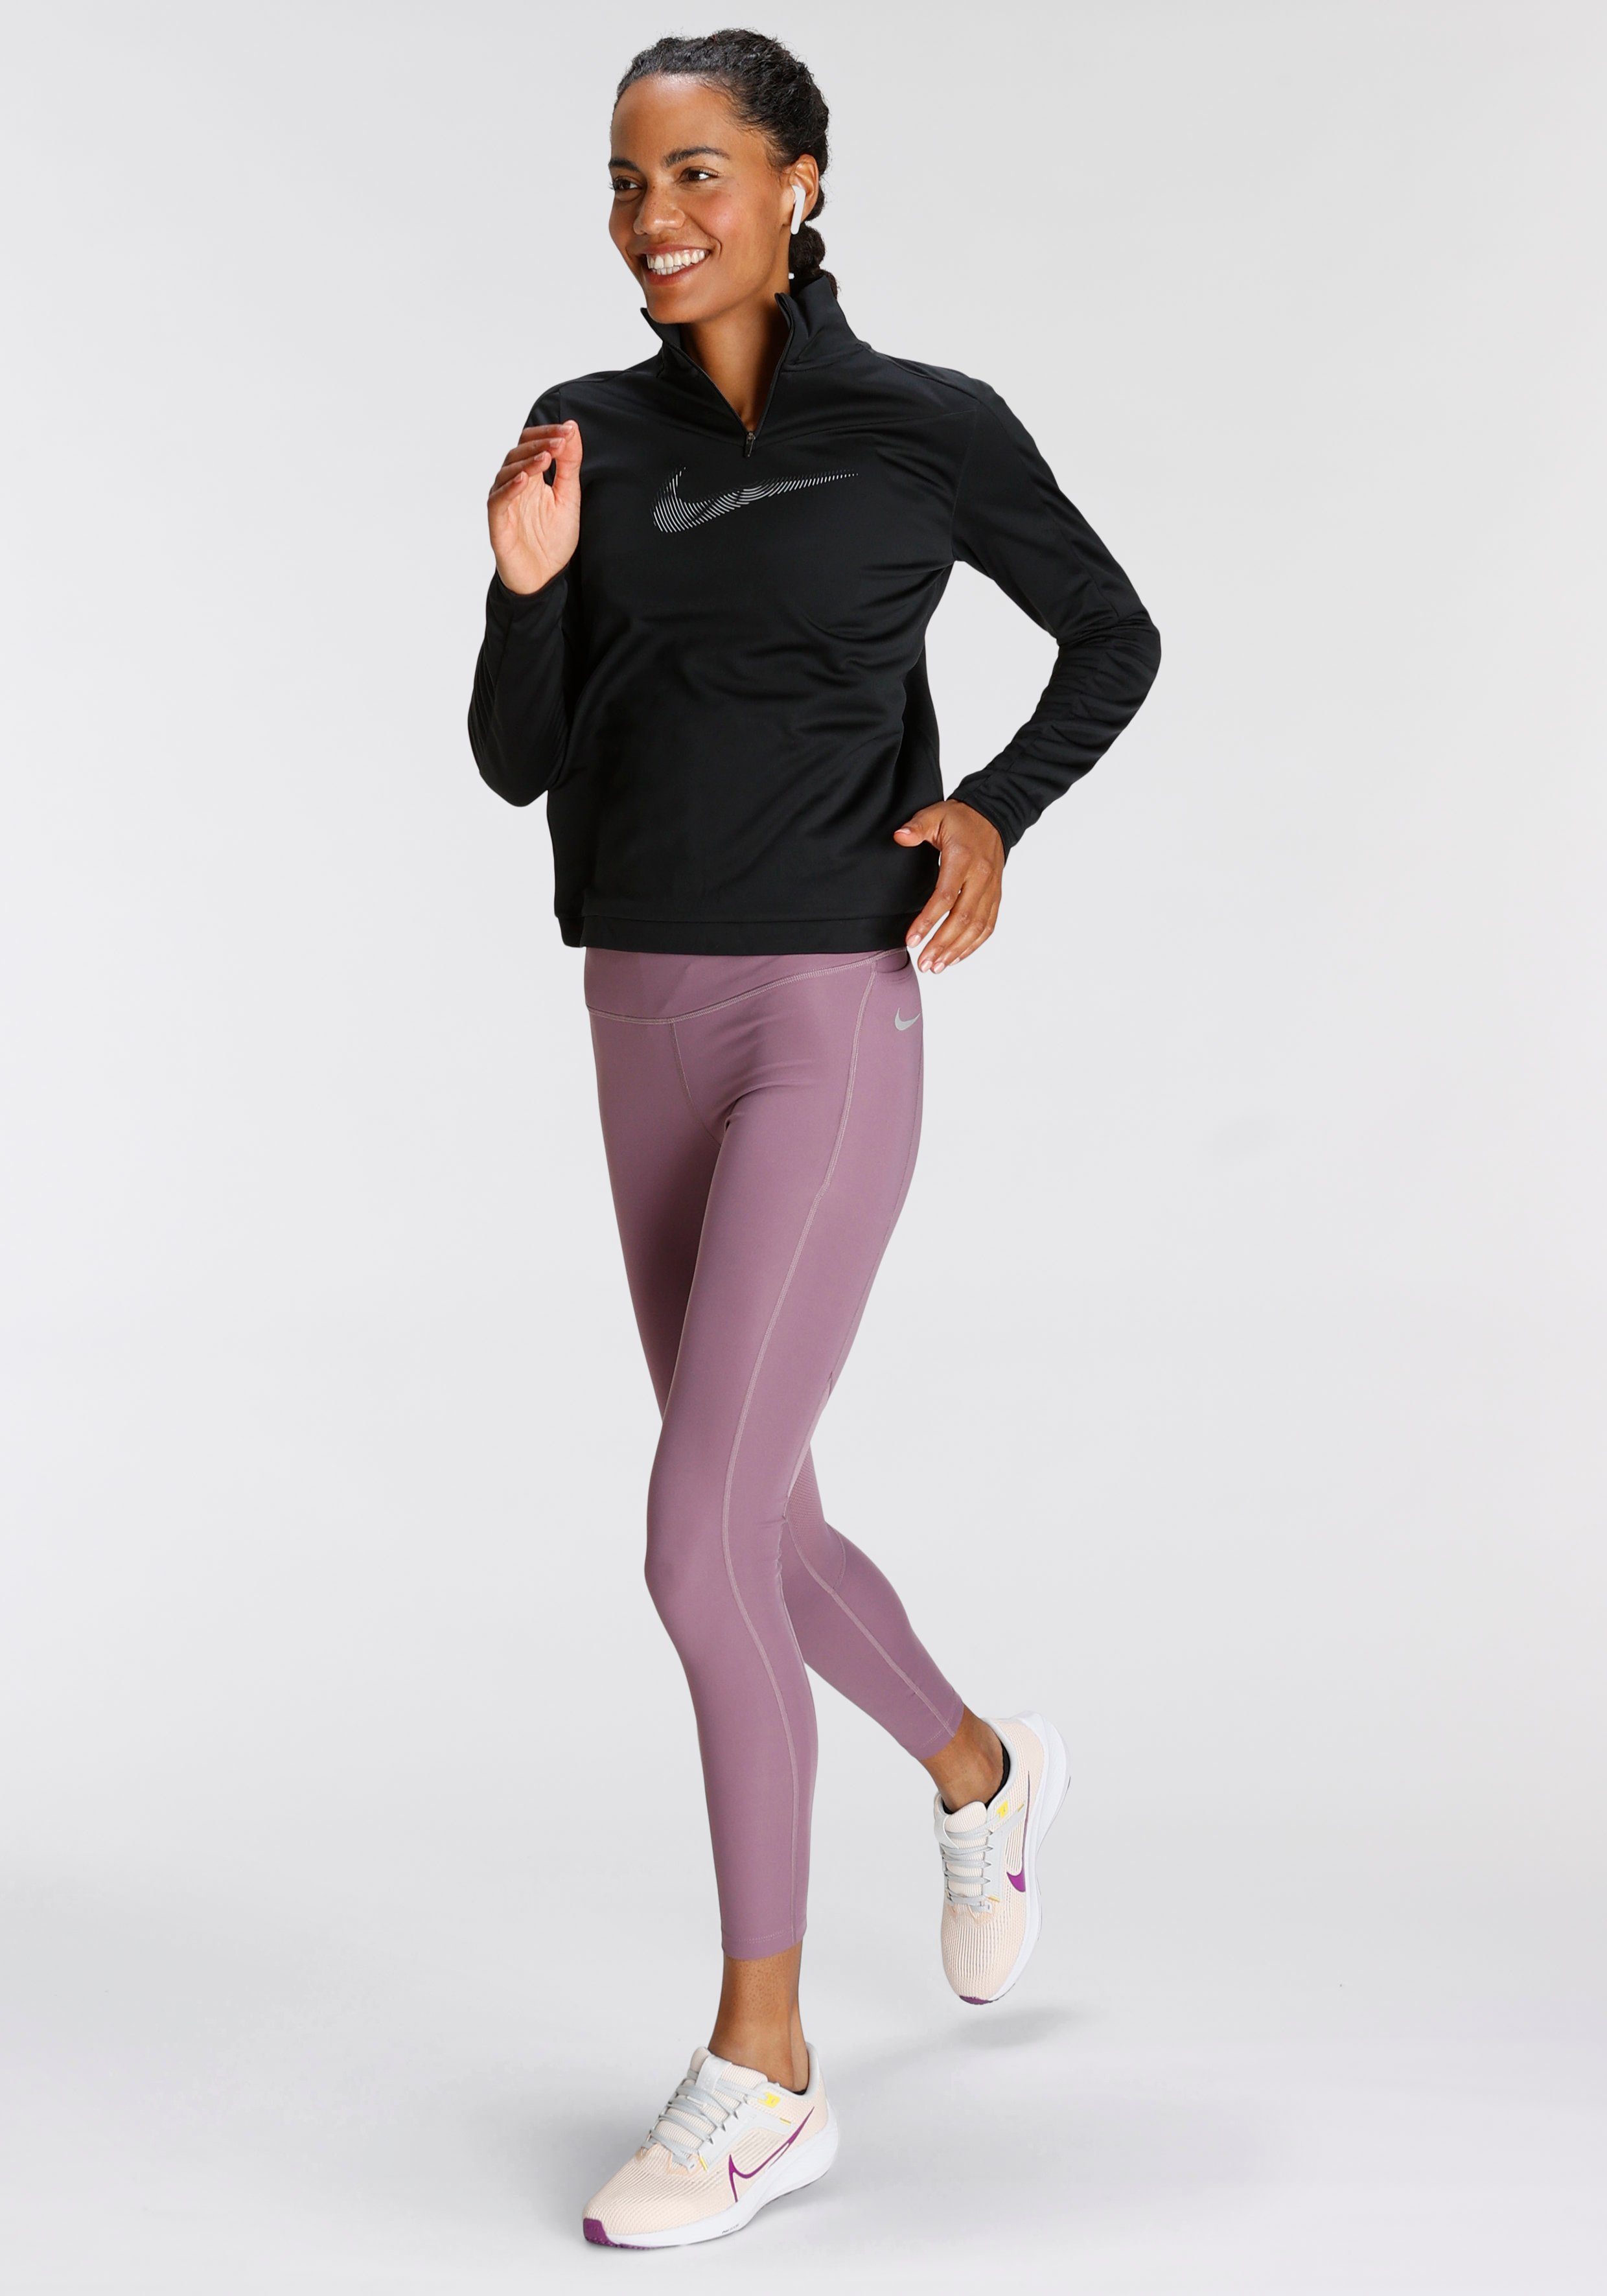 MID-RISE FAST RUNNING POCKET DUST/REFLECTIVE Lauftights Nike LEGGINGS SILV WOMEN'S VIOLET EPIC